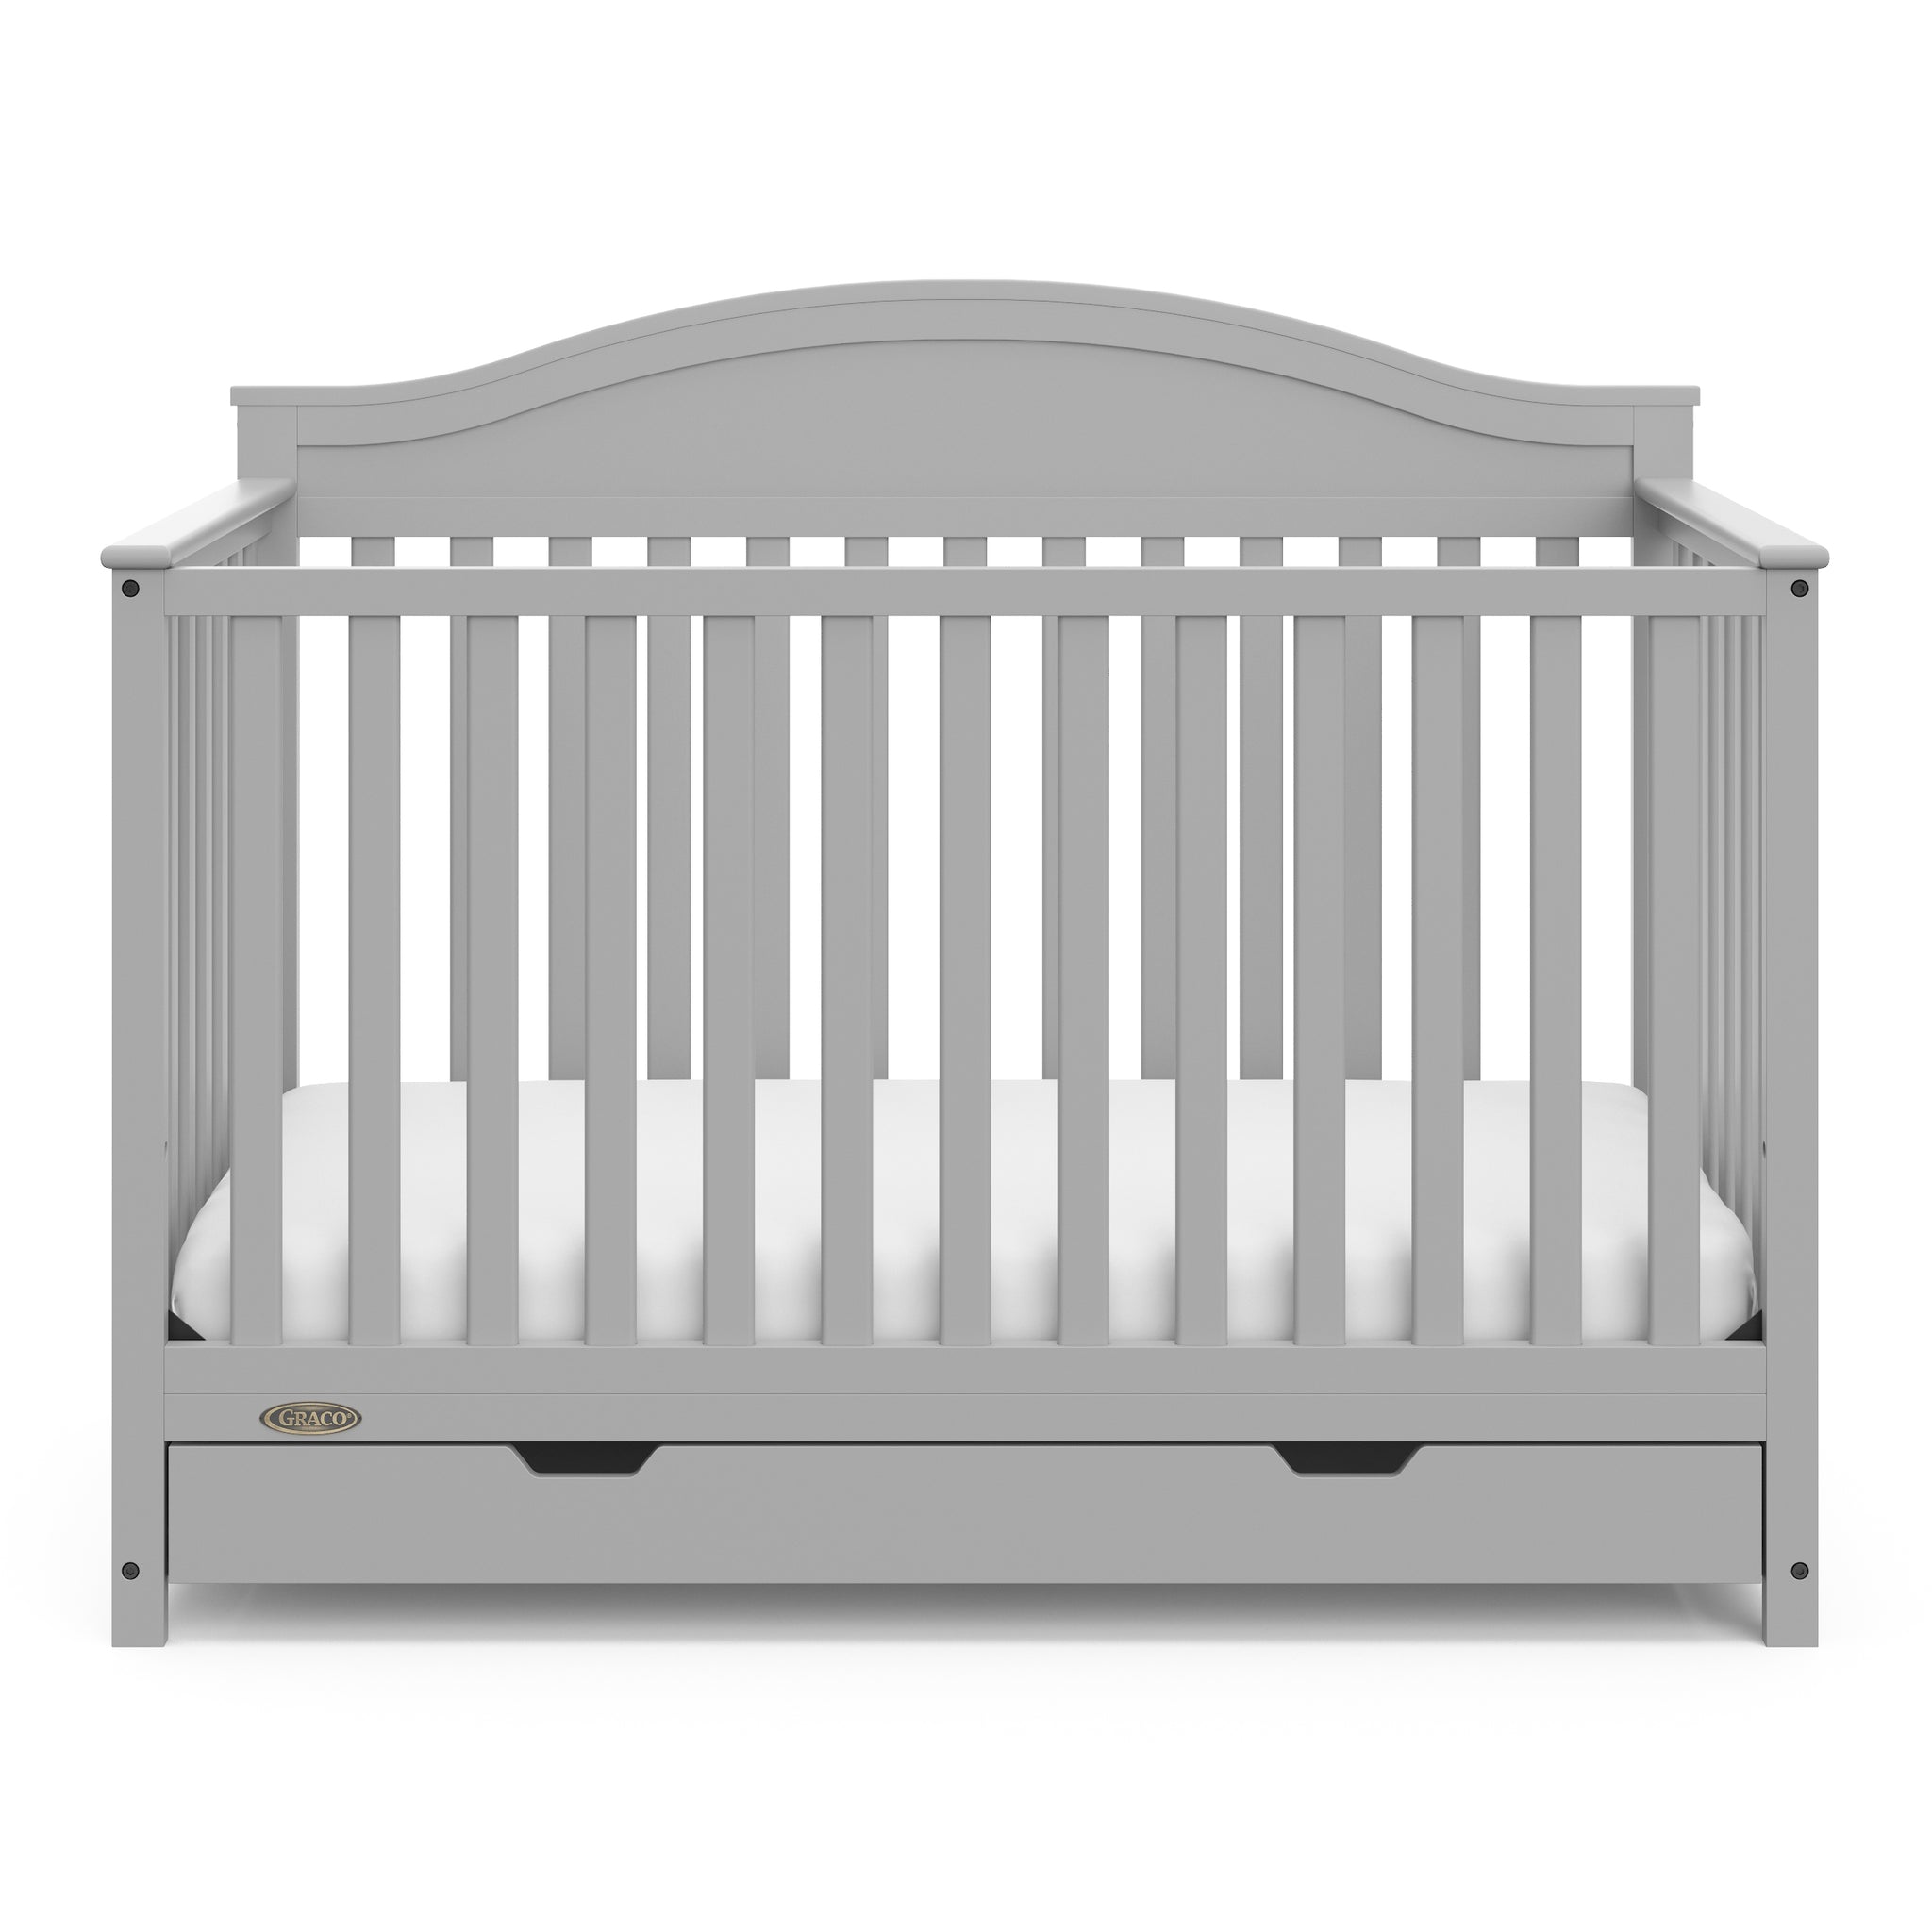 Front view of pebble gray crib